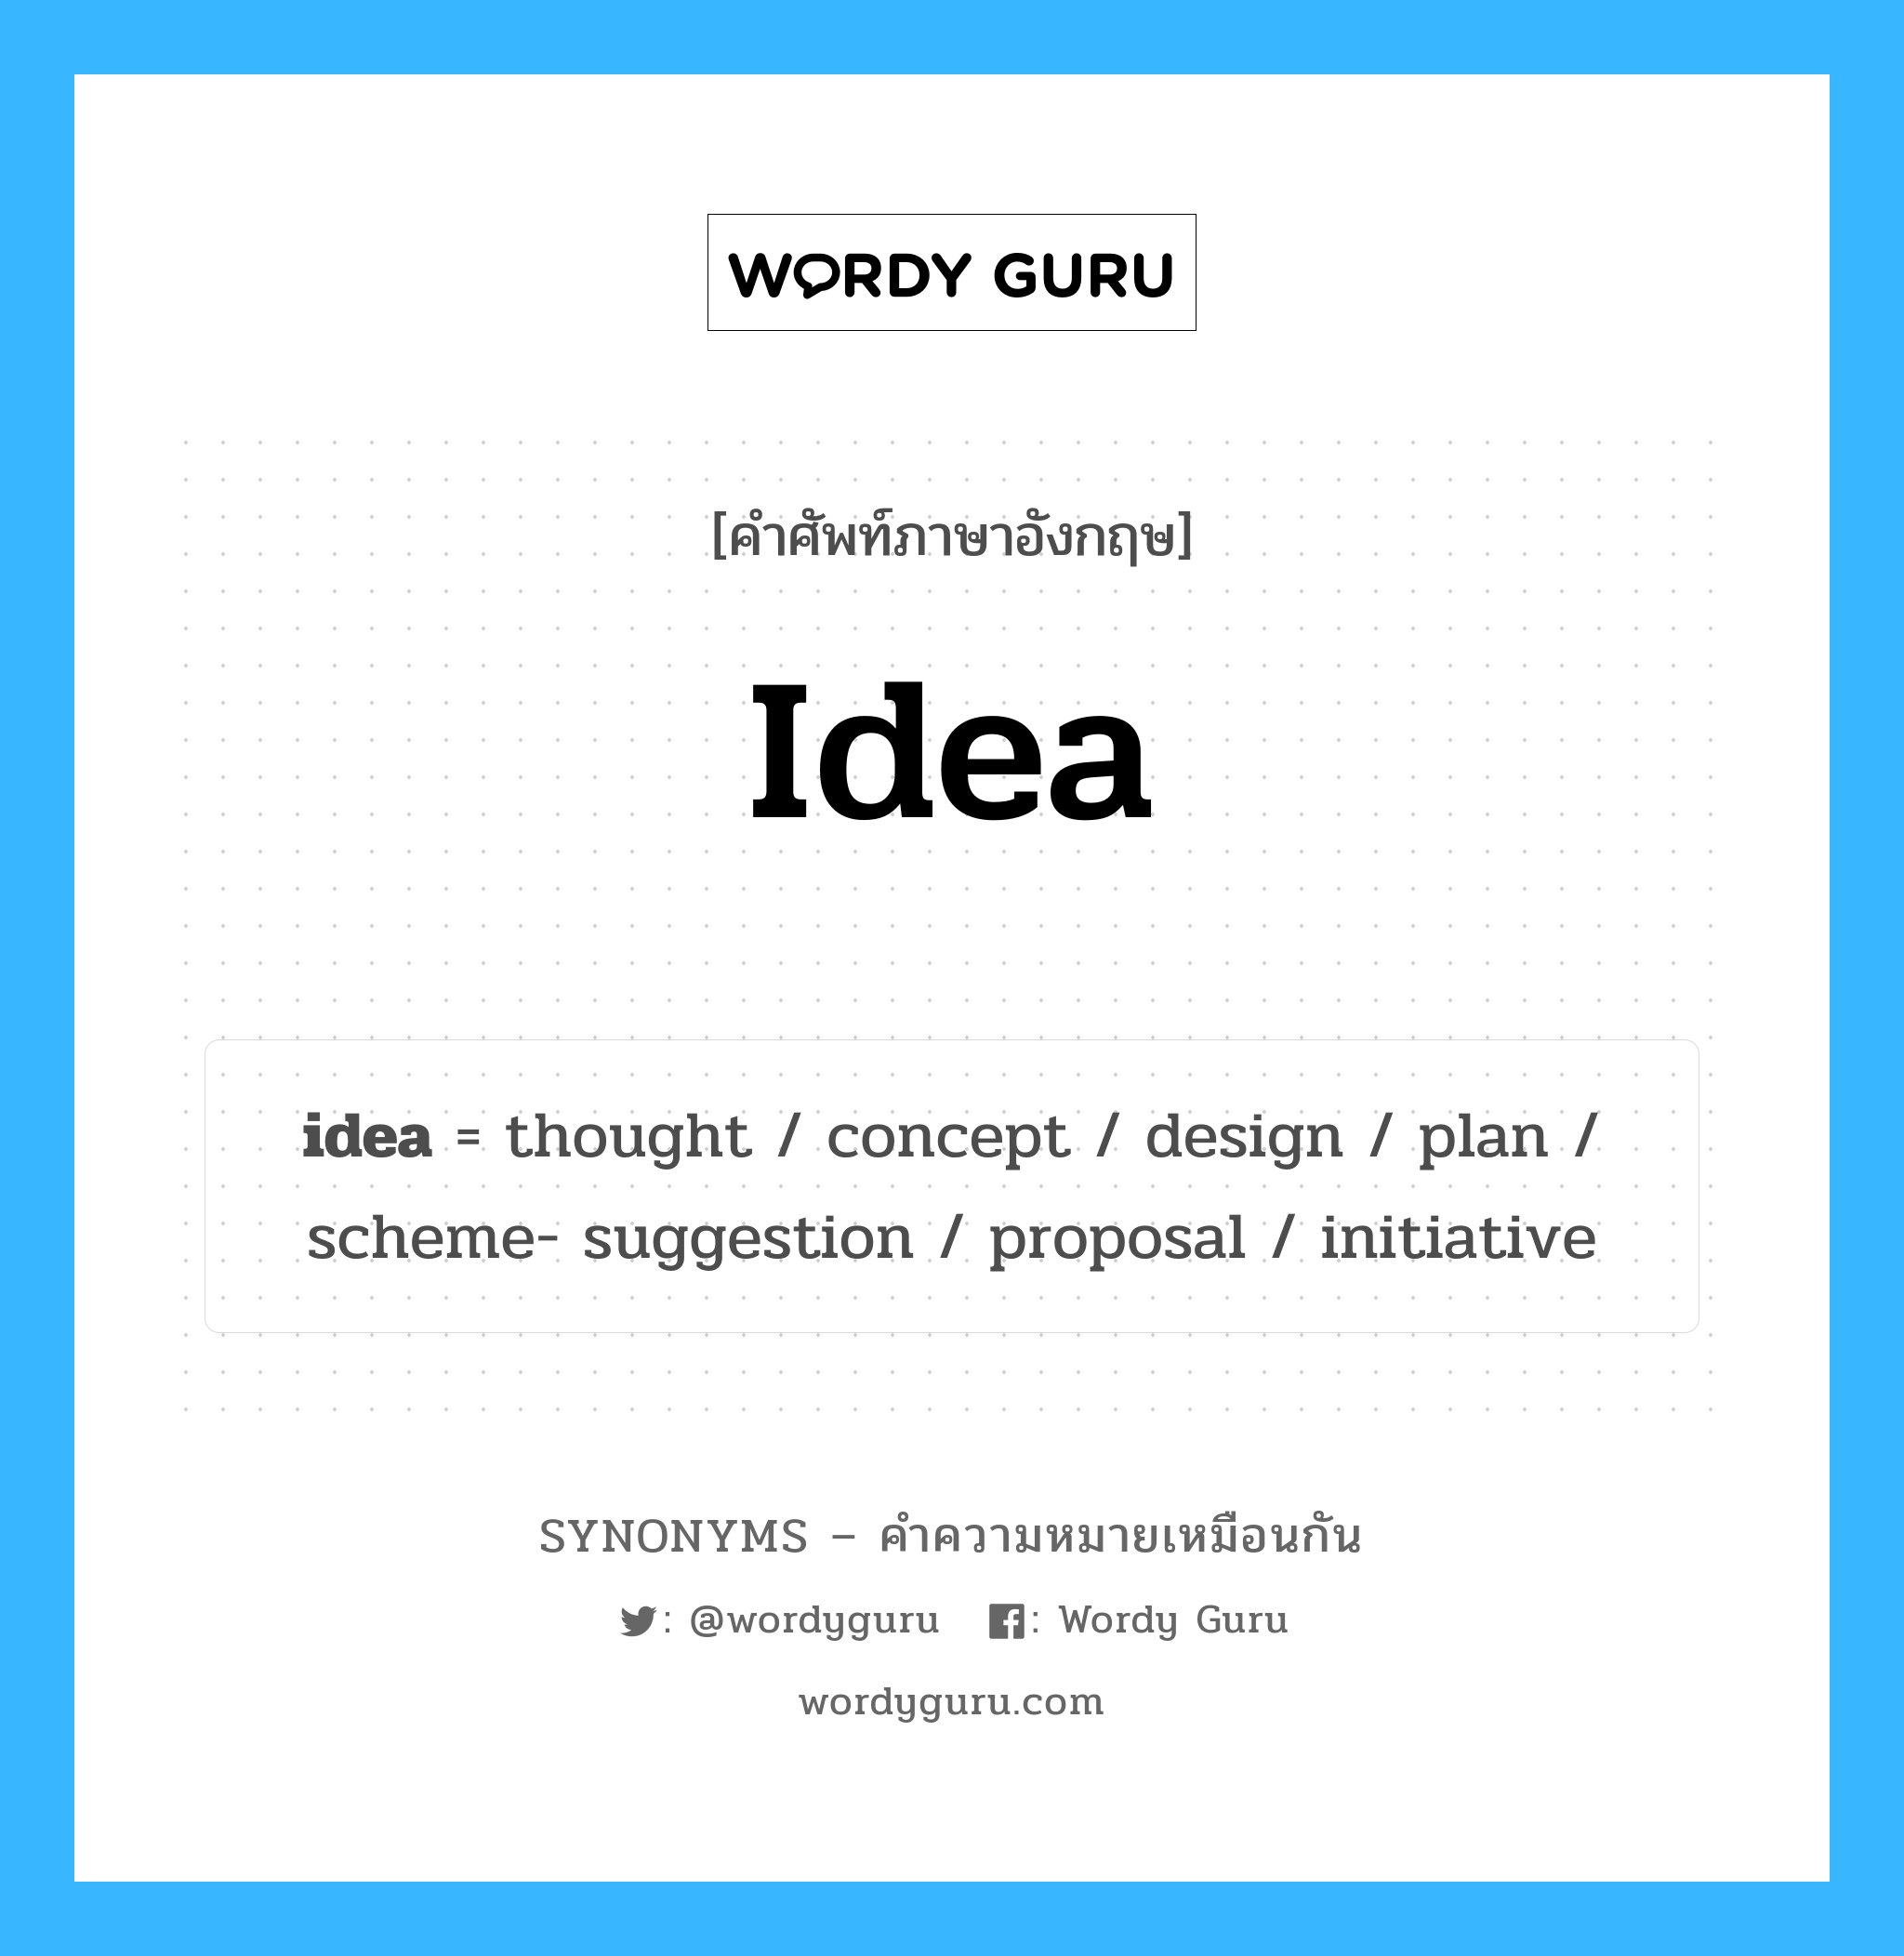 thought เป็นหนึ่งใน idea และมีคำอื่น ๆ อีกดังนี้, คำศัพท์ภาษาอังกฤษ thought ความหมายคล้ายกันกับ idea แปลว่า ความคิด หมวด idea